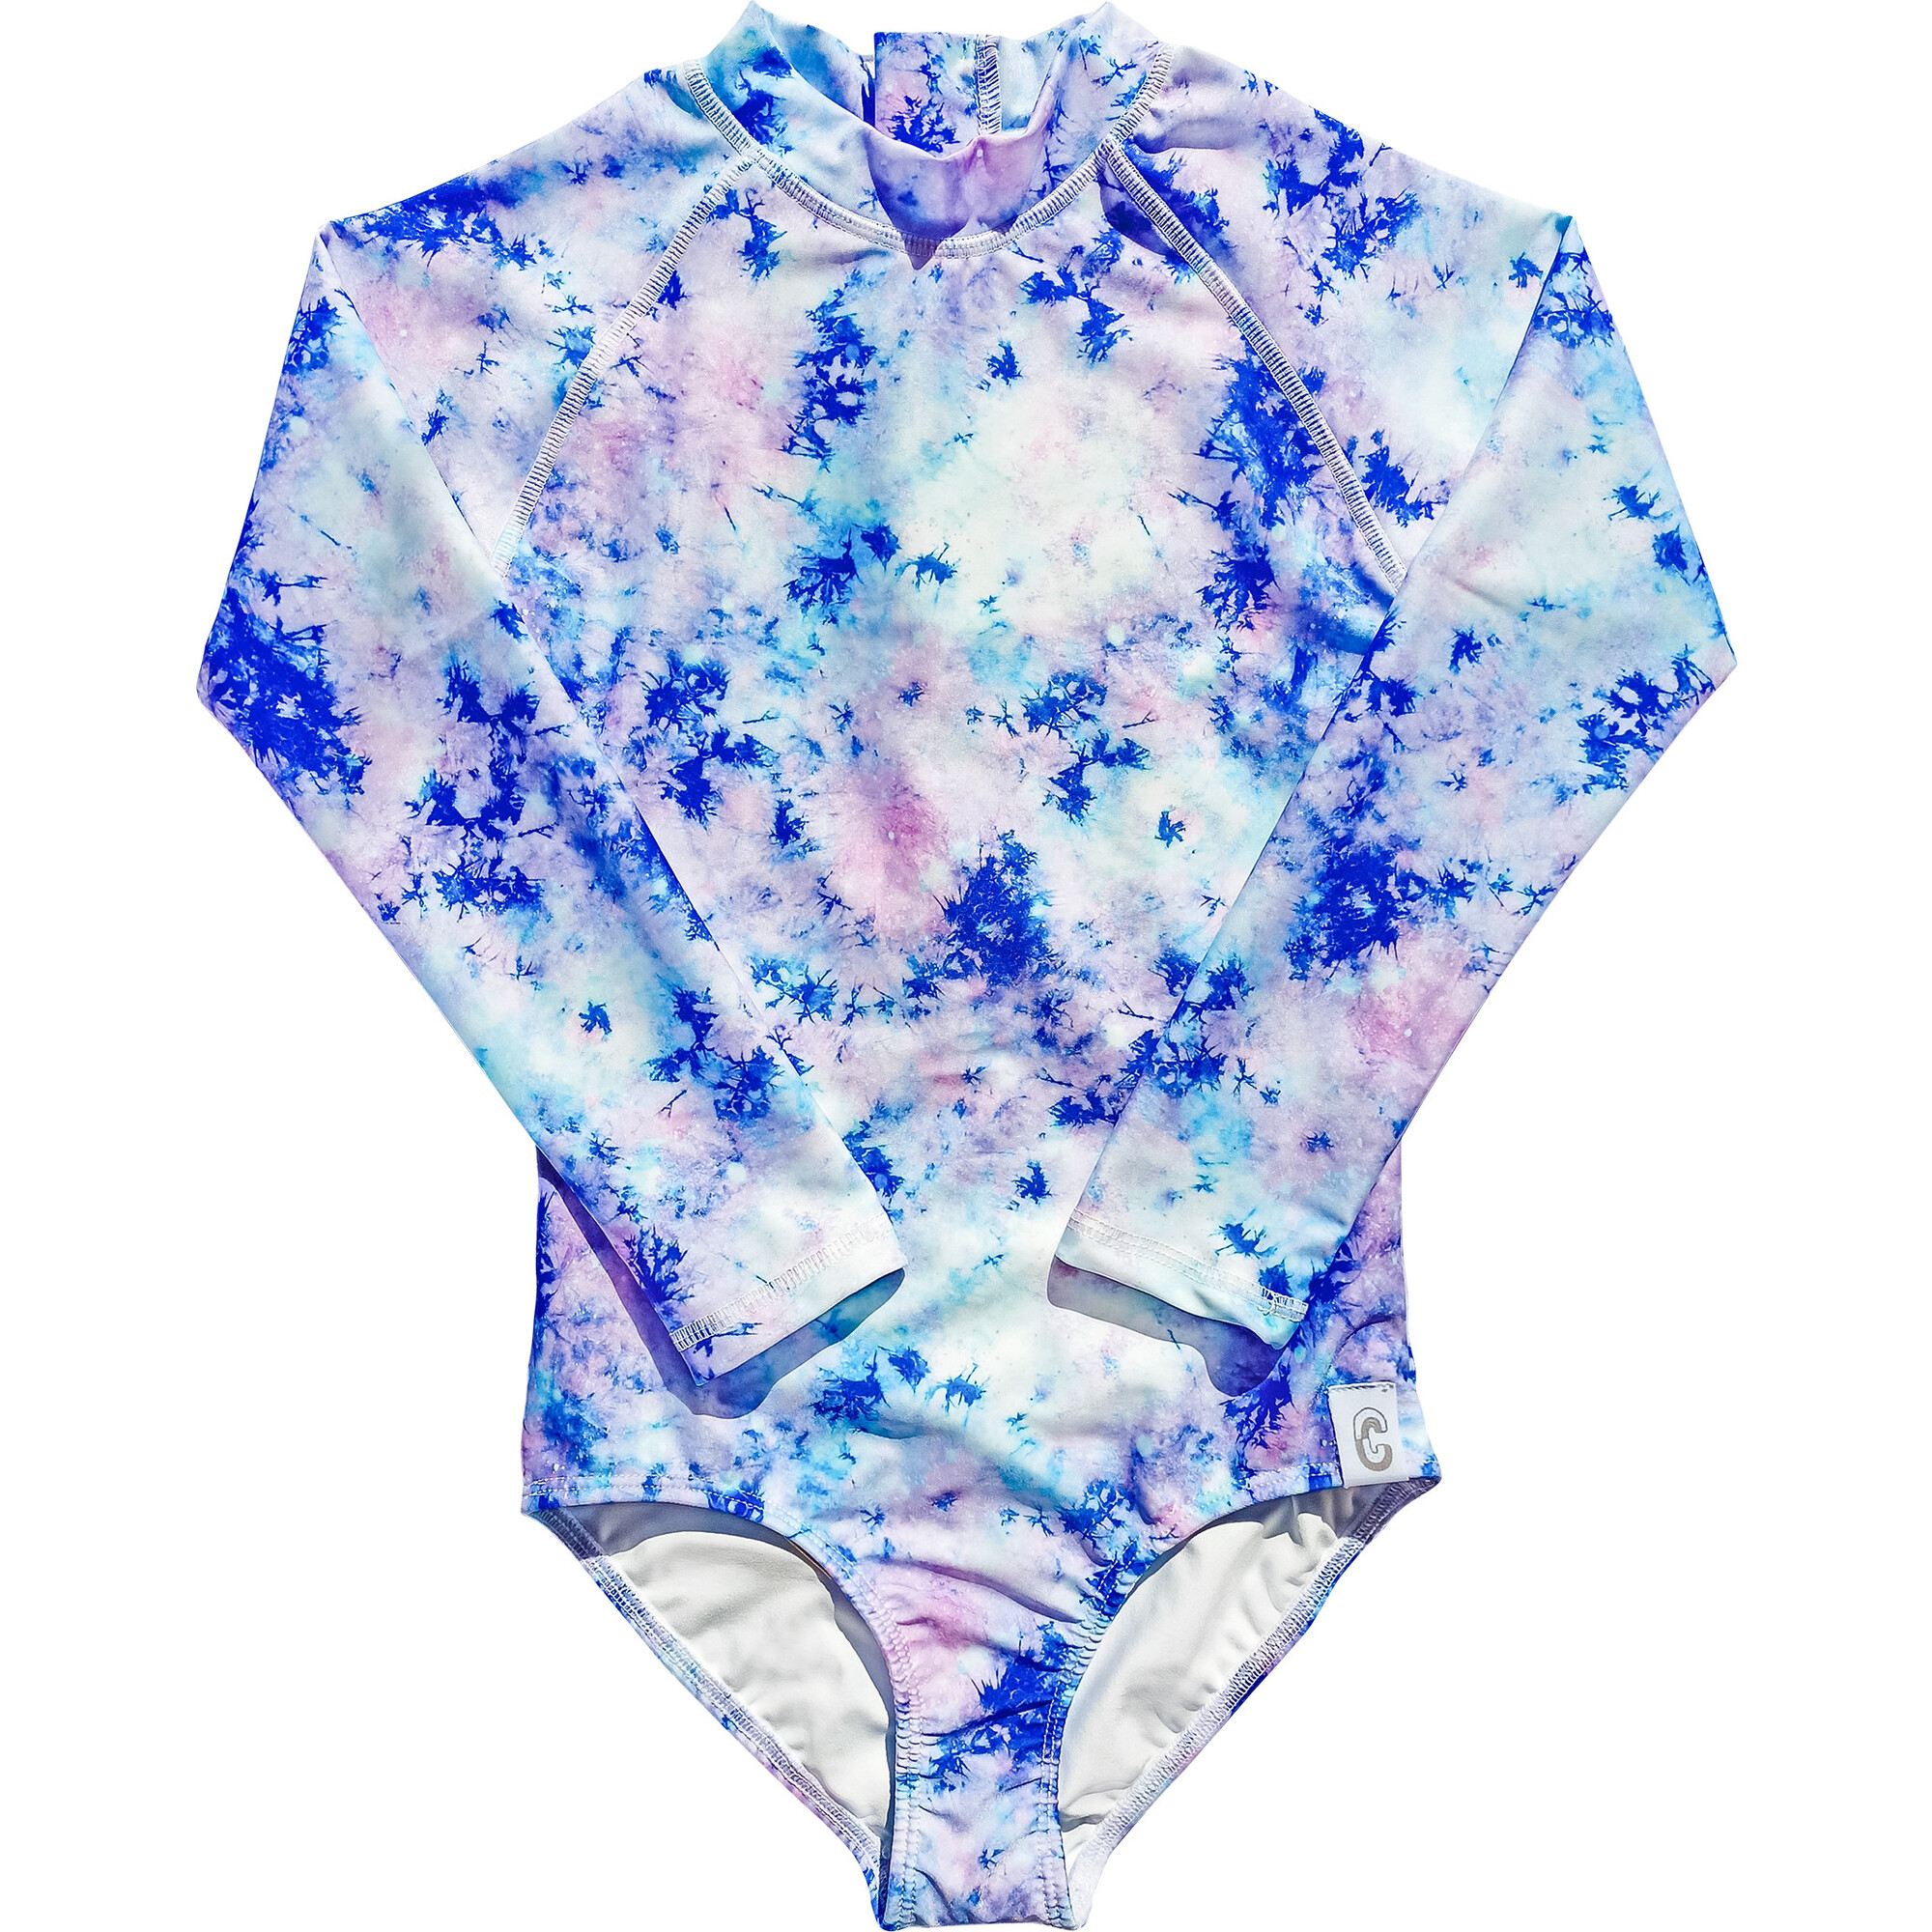 Mermaid Craze Bottom Swim Suit – wearbahari